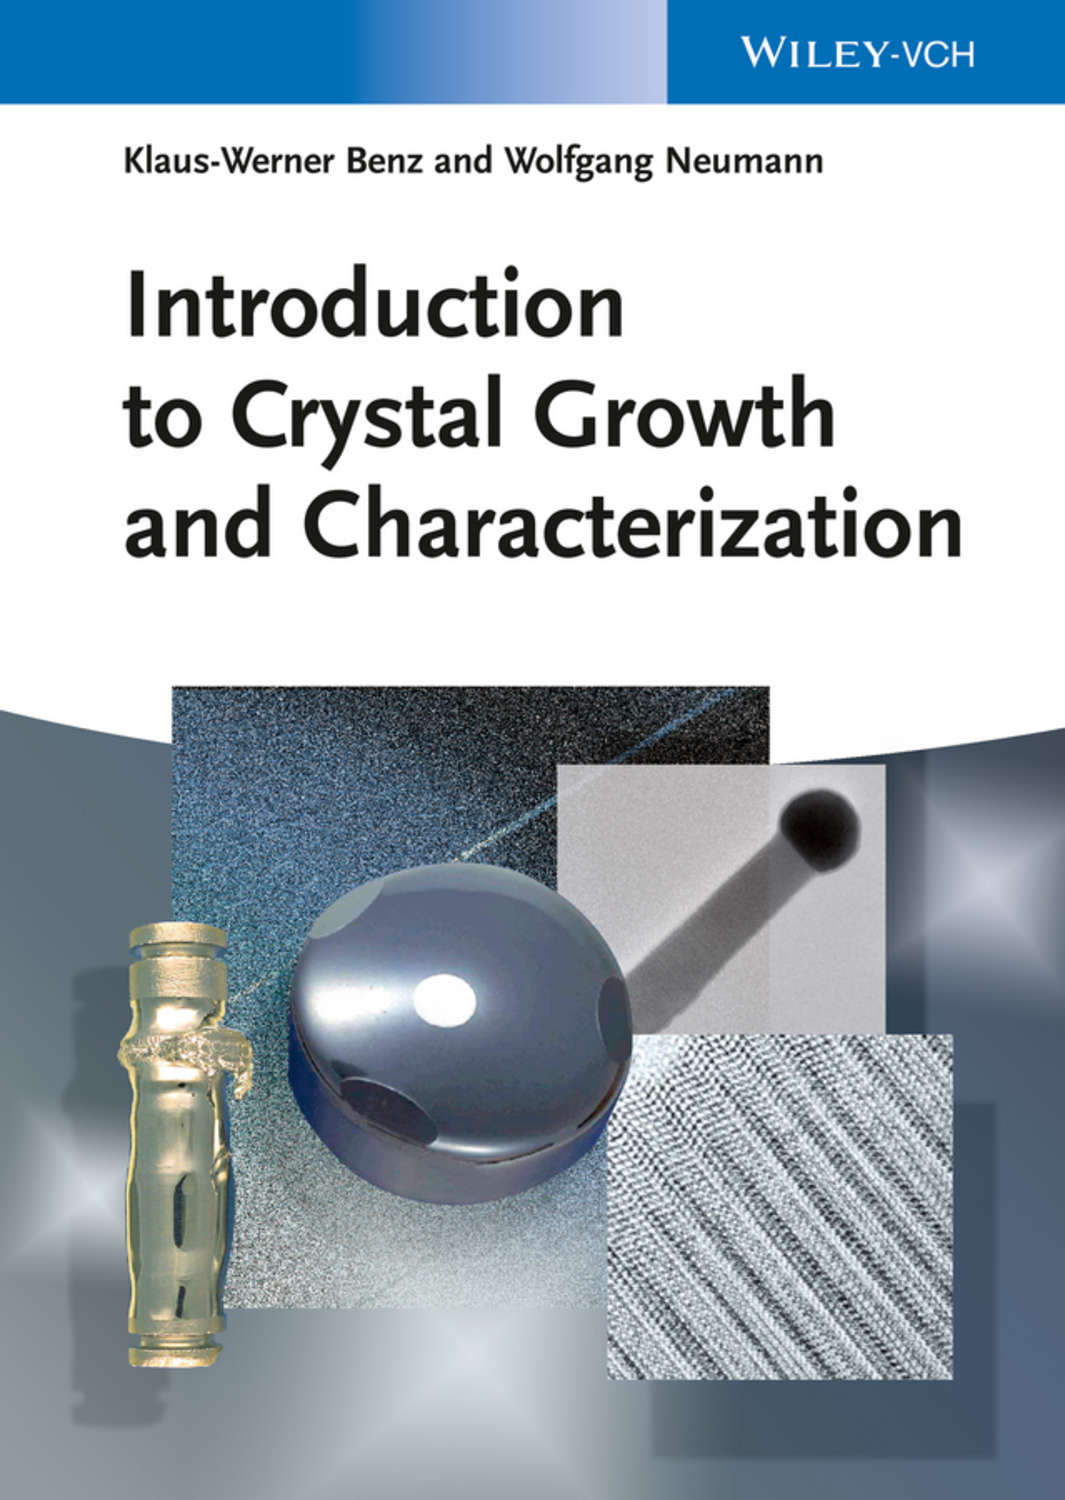 Crystal growth